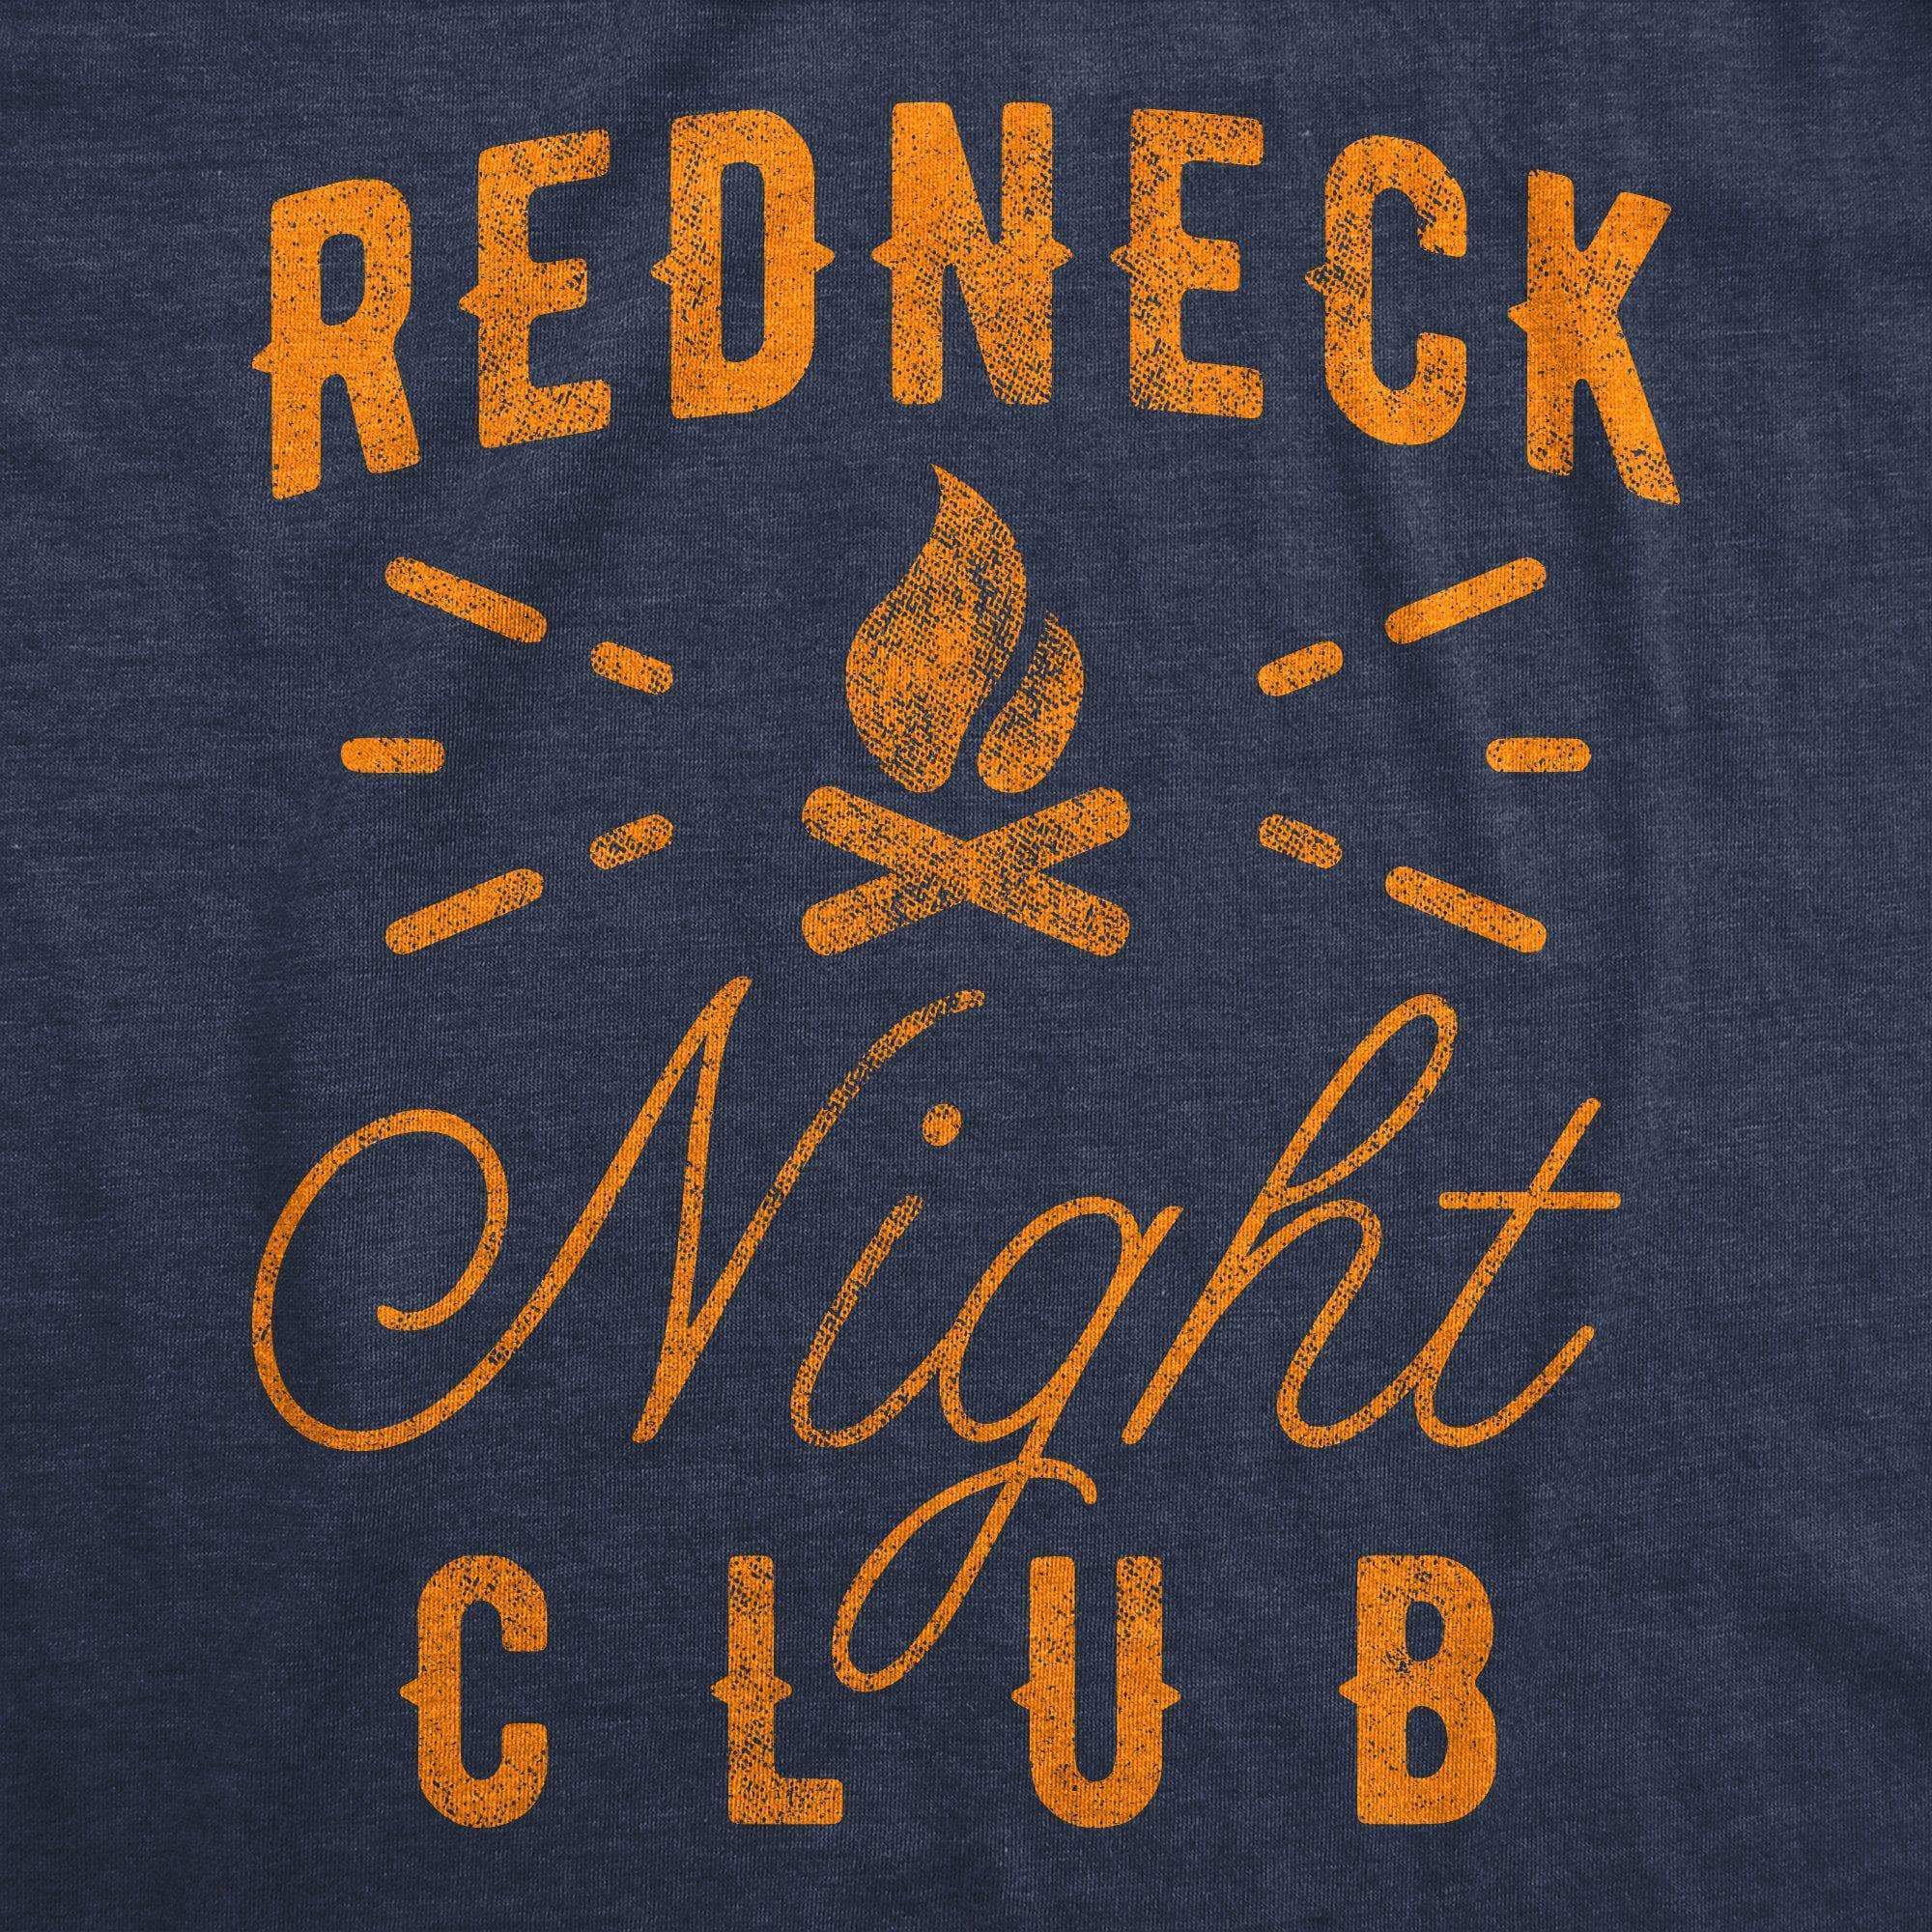 Redneck Night Club Men's Tshirt - Crazy Dog T-Shirts